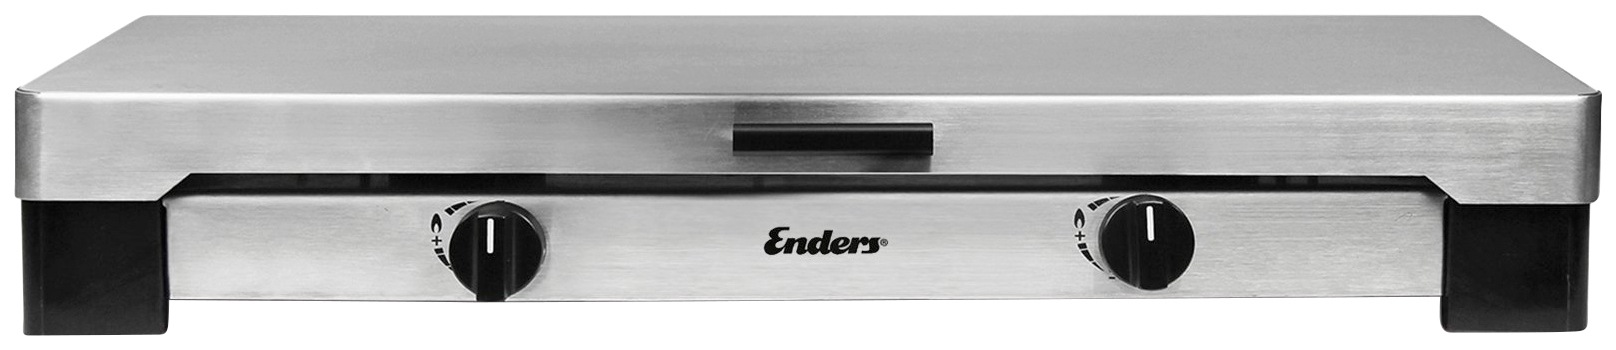 Enders® Gaskocher »Brisbane 2 Z«, Edelstahl, 49 cmx32 cm, BxLxH: 49x32x9 cm, 2 x 2,3 kW Brenner